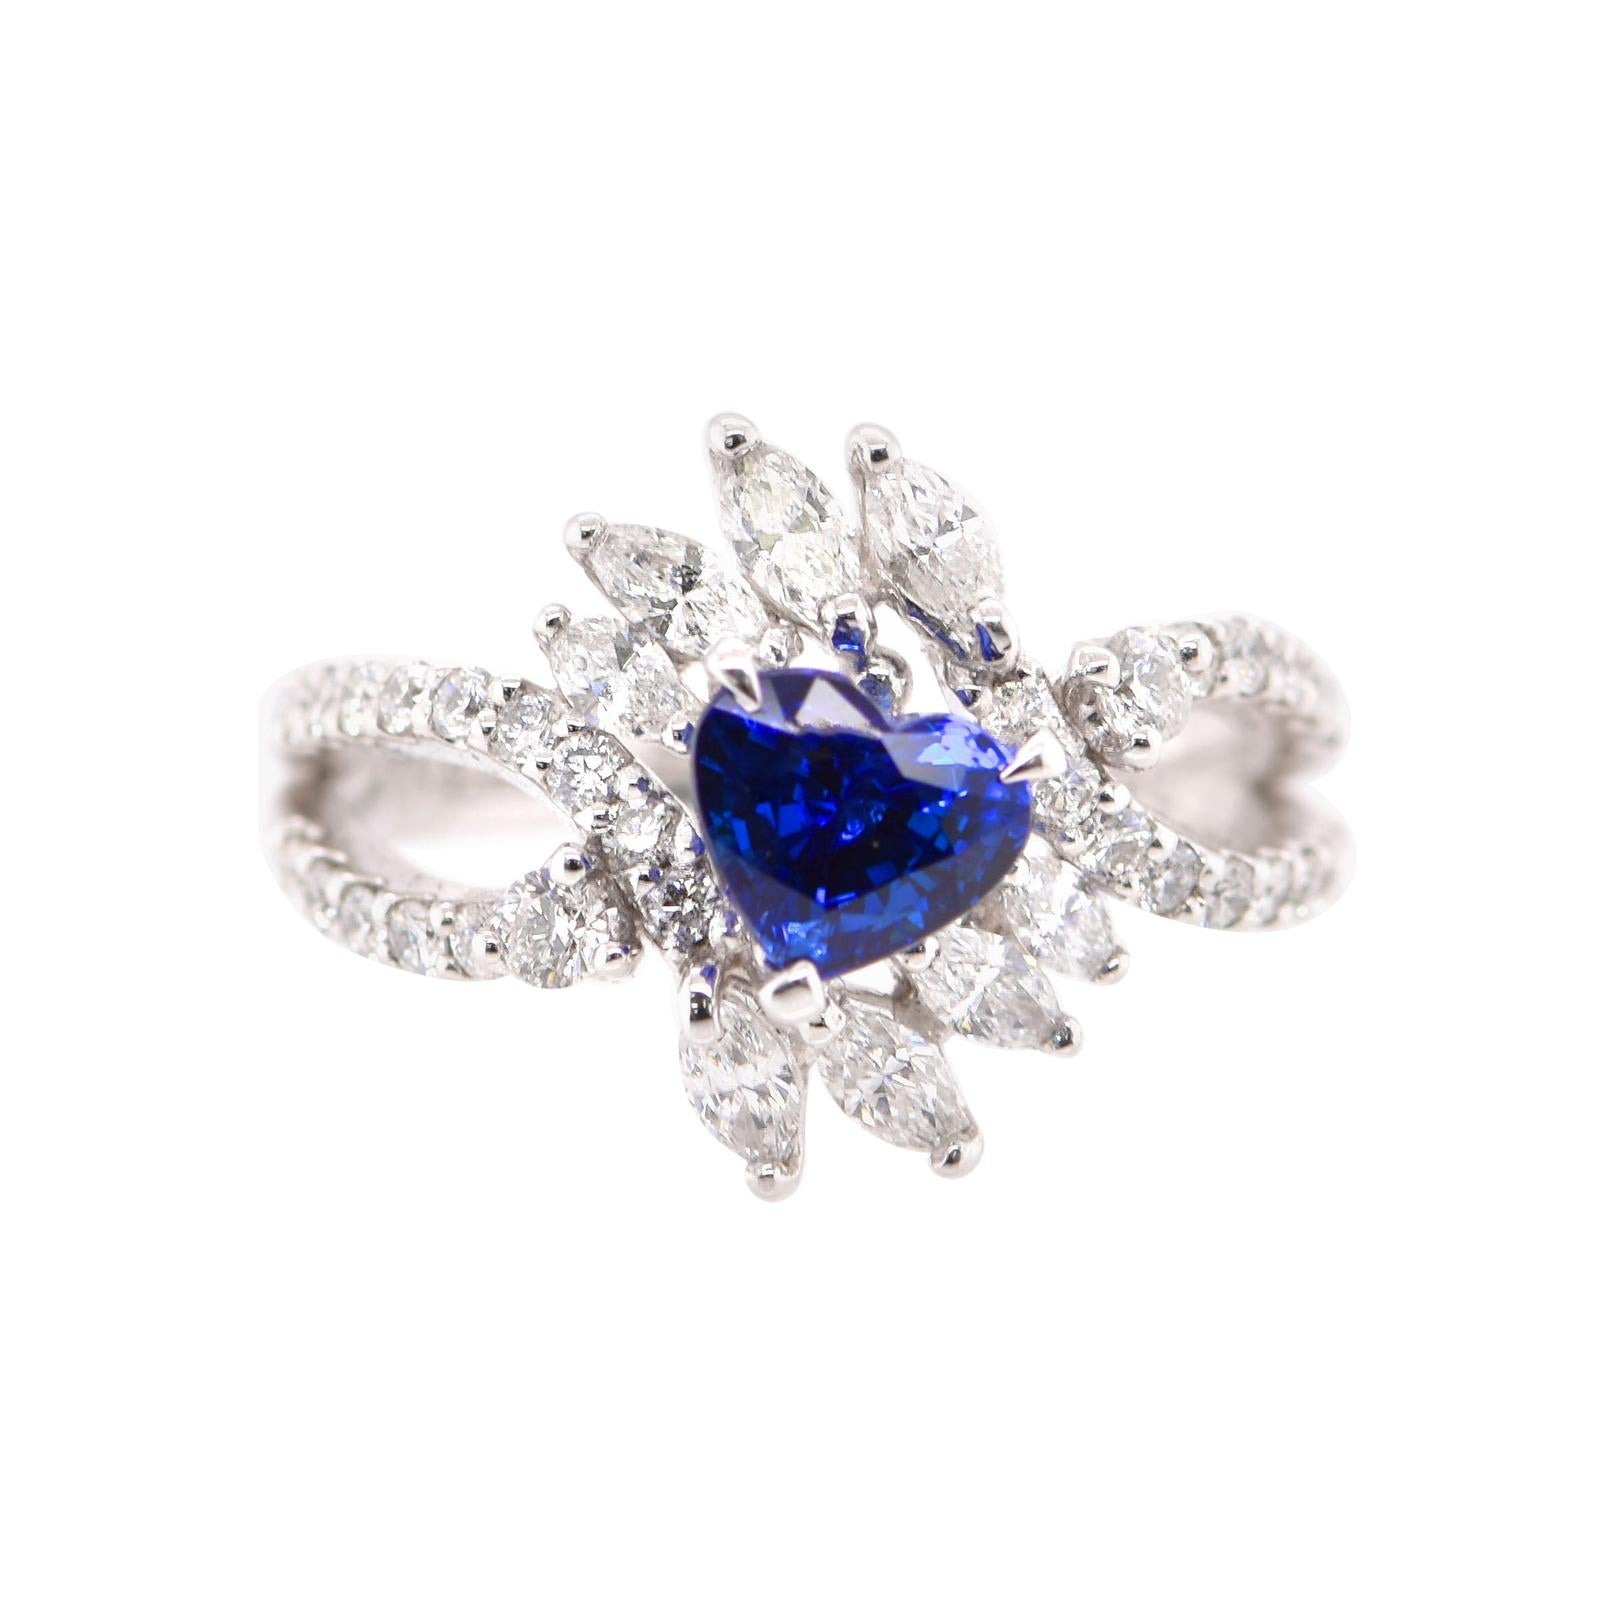 1.37 Carat Sapphire and Diamond Engagement Ring Set in Platinum